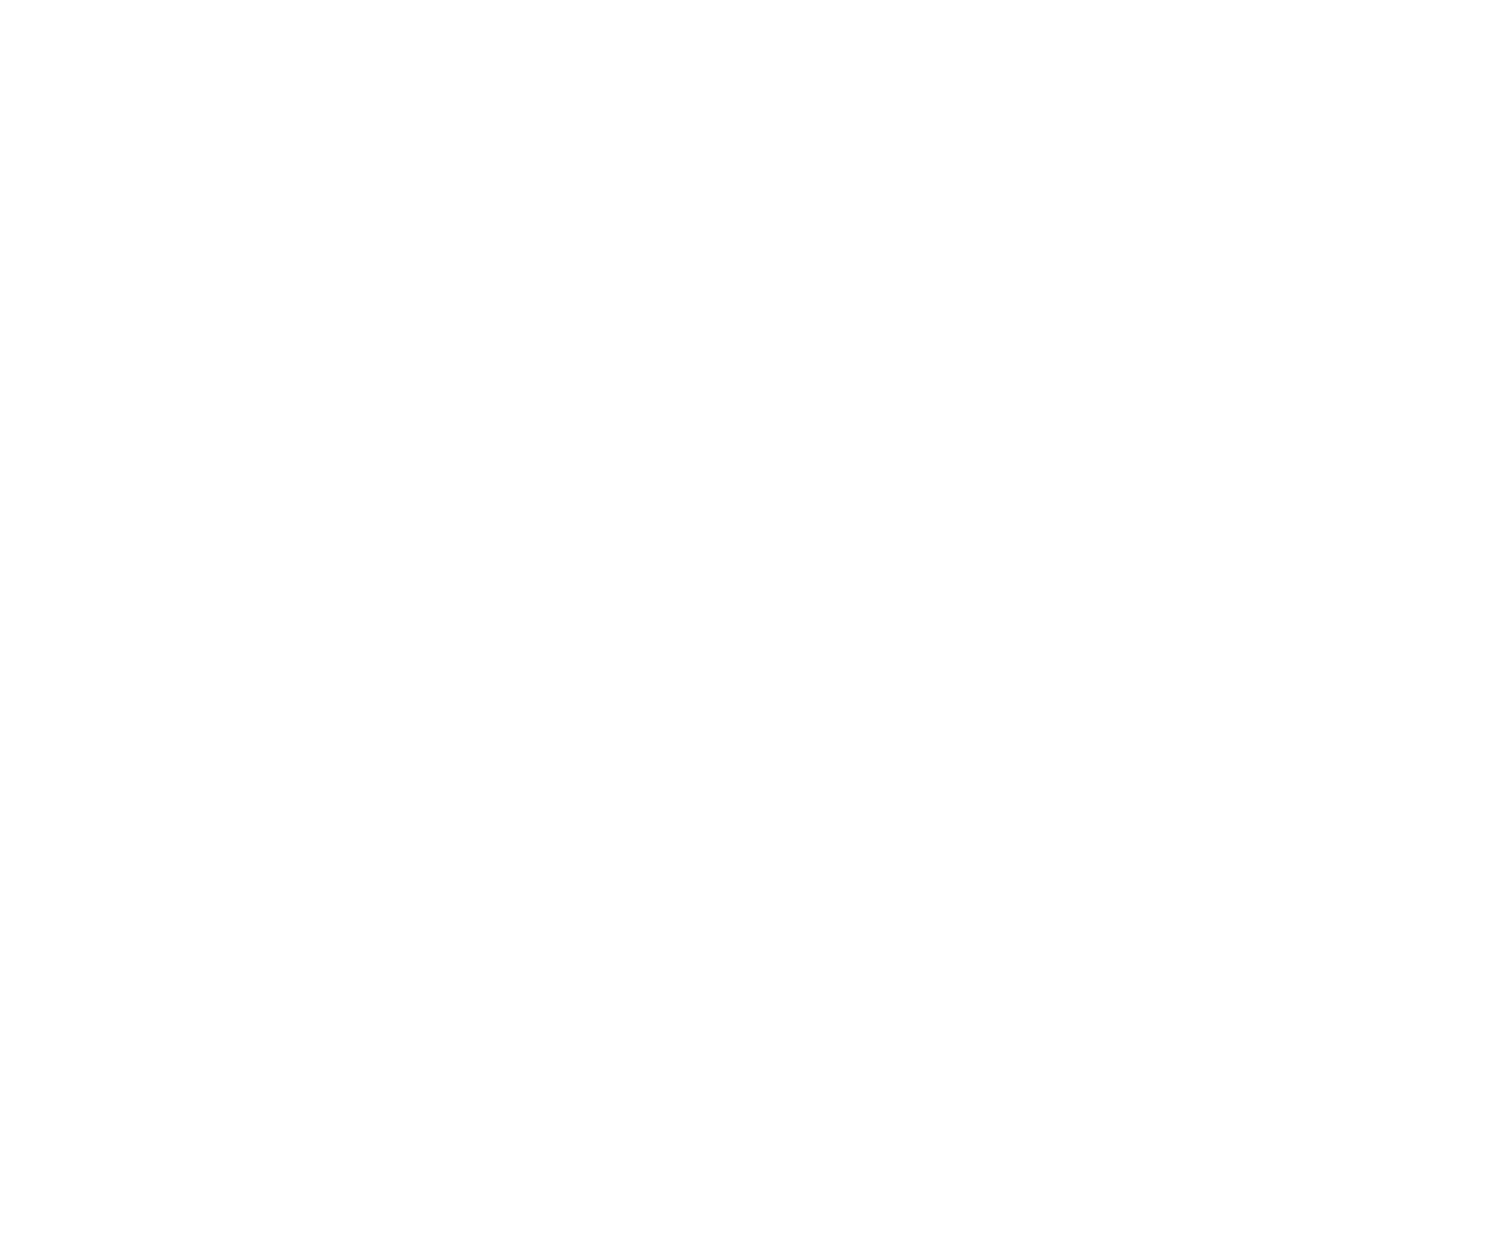 DiDi logo for dark backgrounds (transparent PNG)